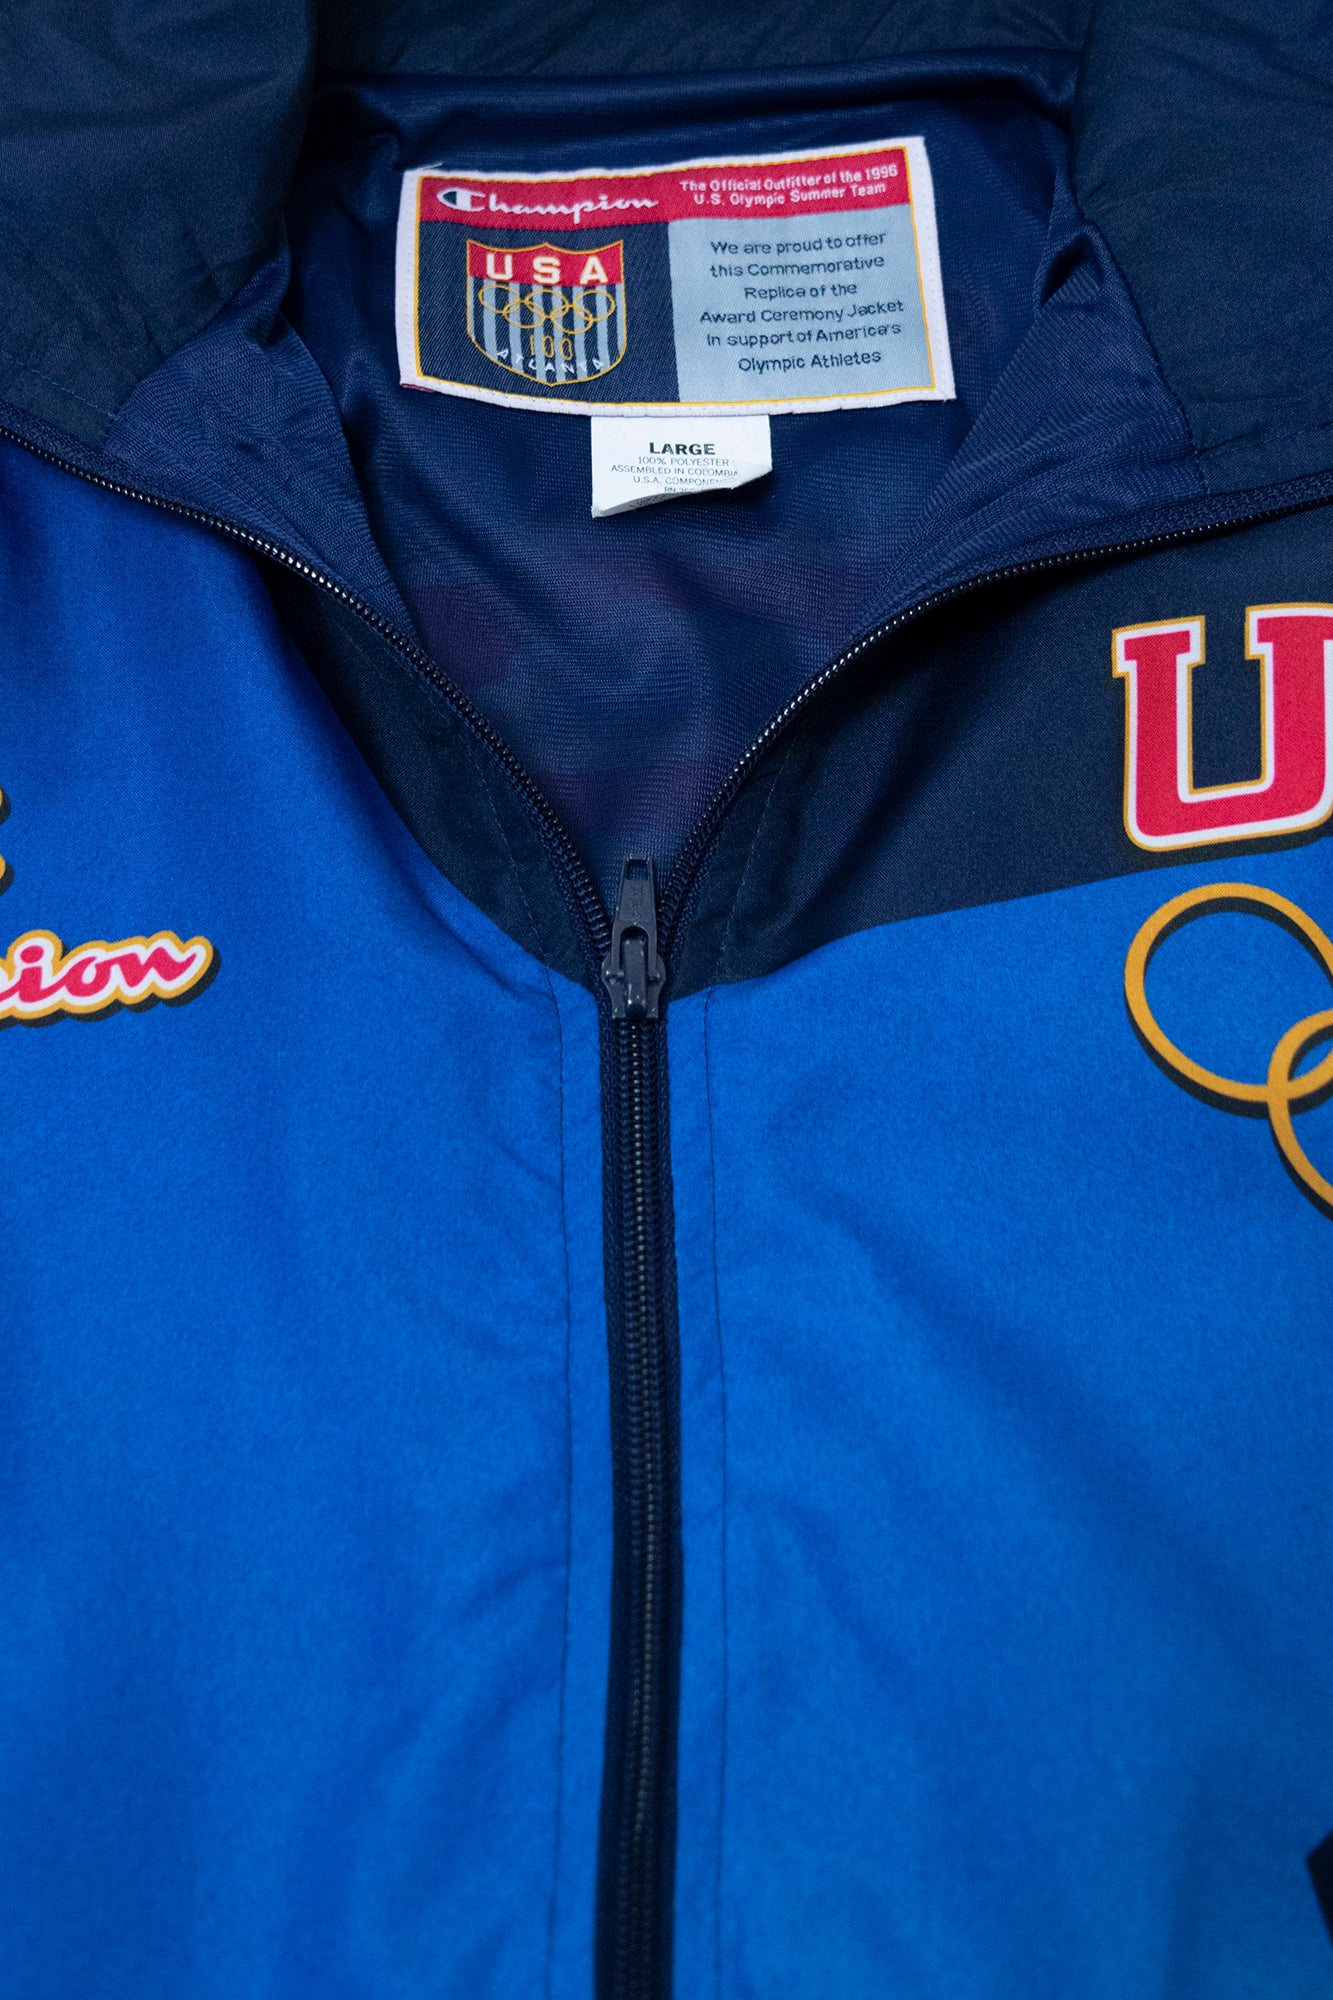 1996 Champion U.S. Olympic Team Track-Jacket - L